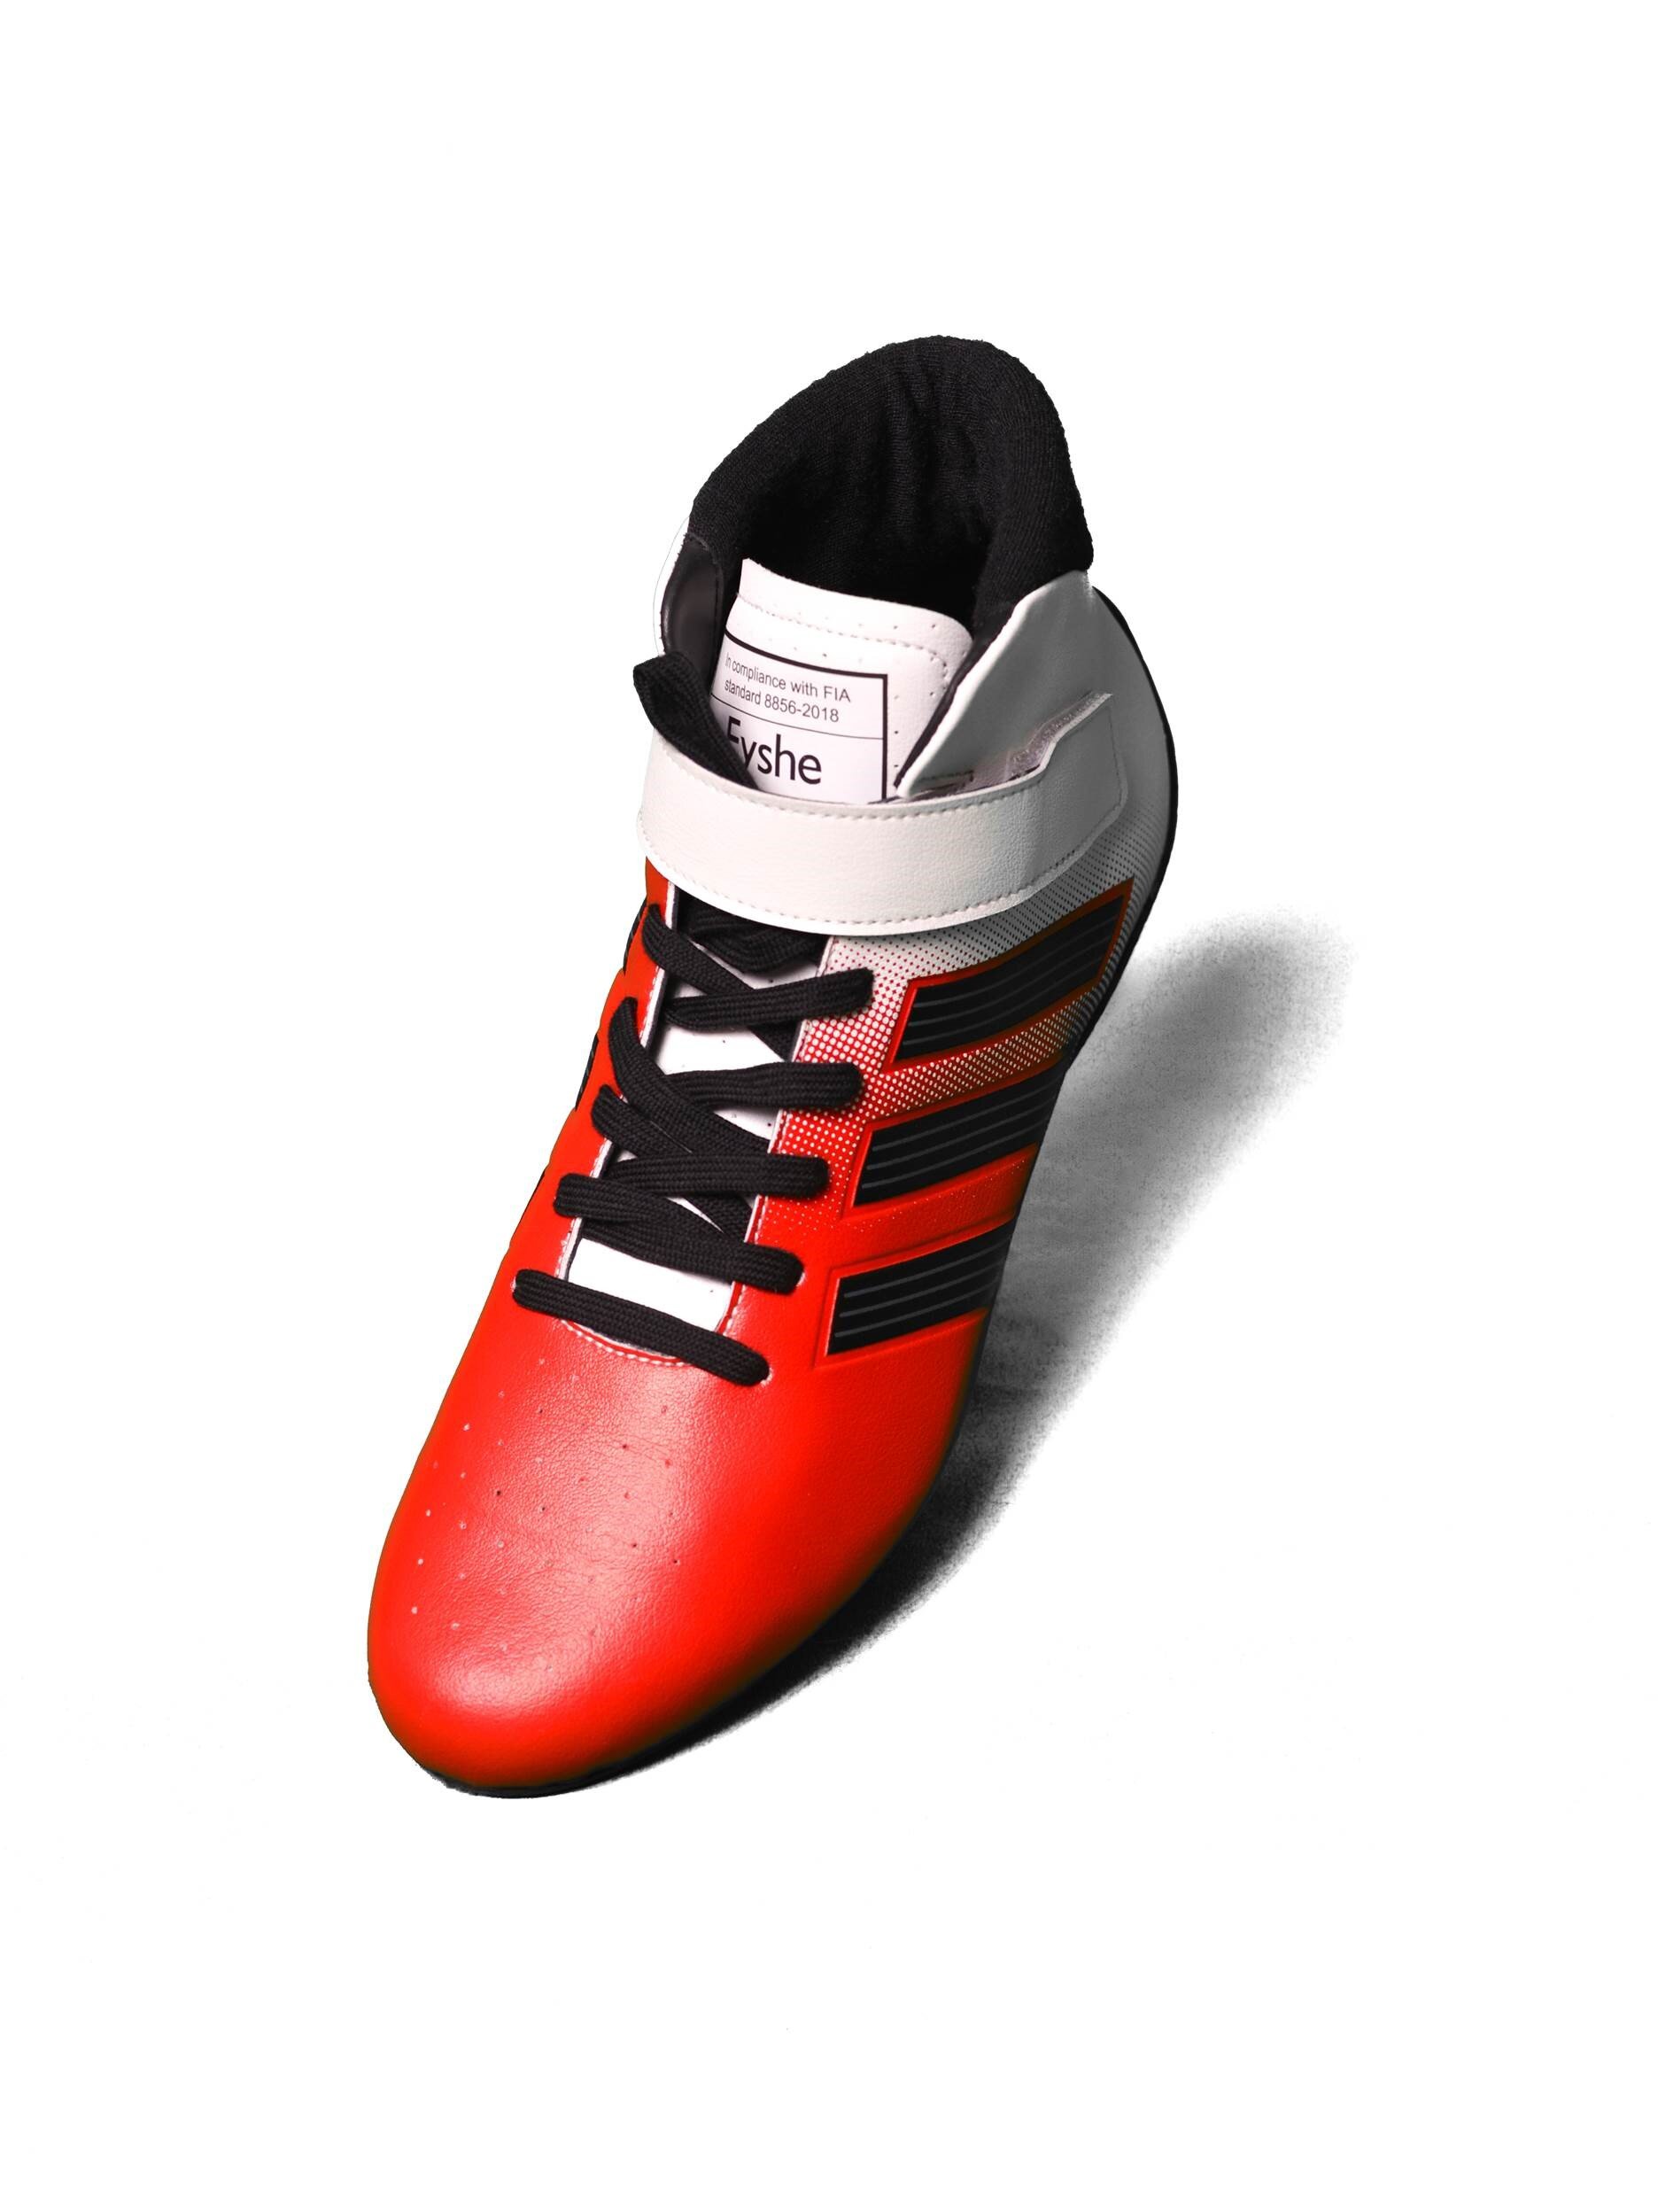 Adidas raceschoen type RS rood zwart FIA homologatie